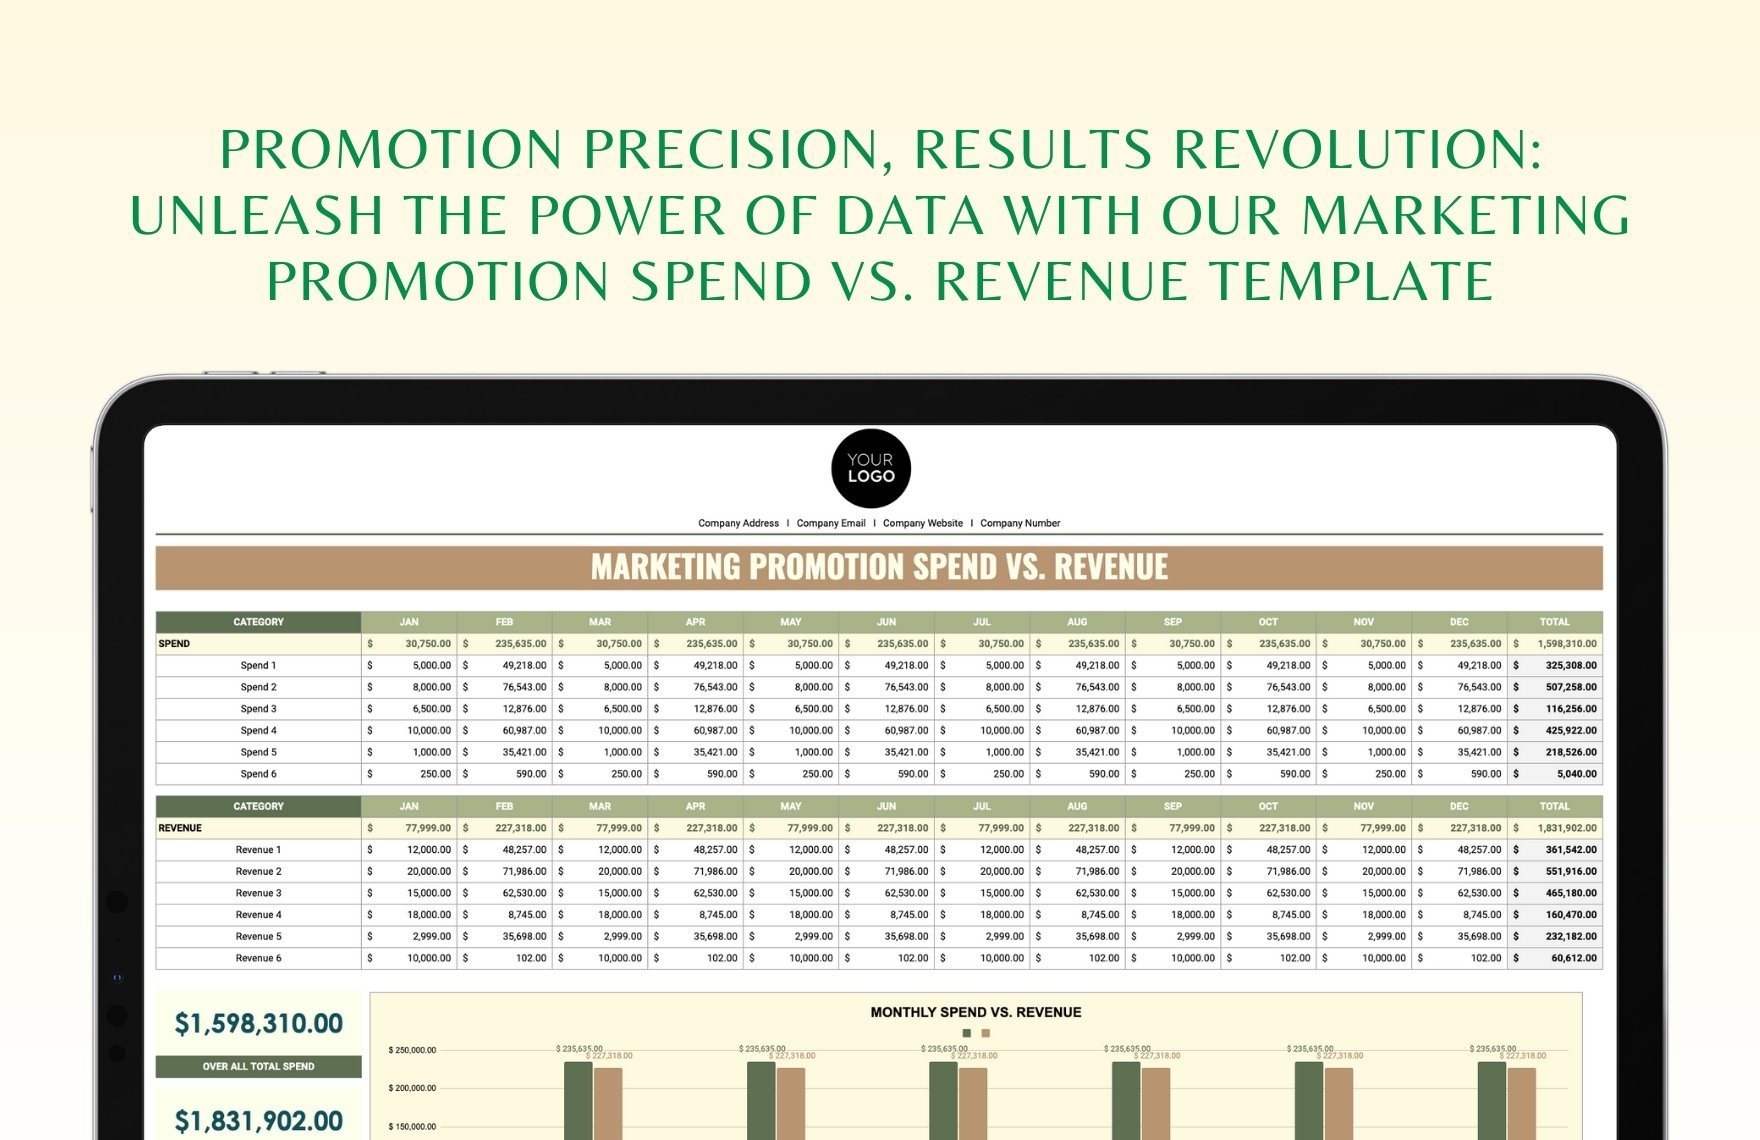 Marketing Promotion Spend vs. Revenue Template